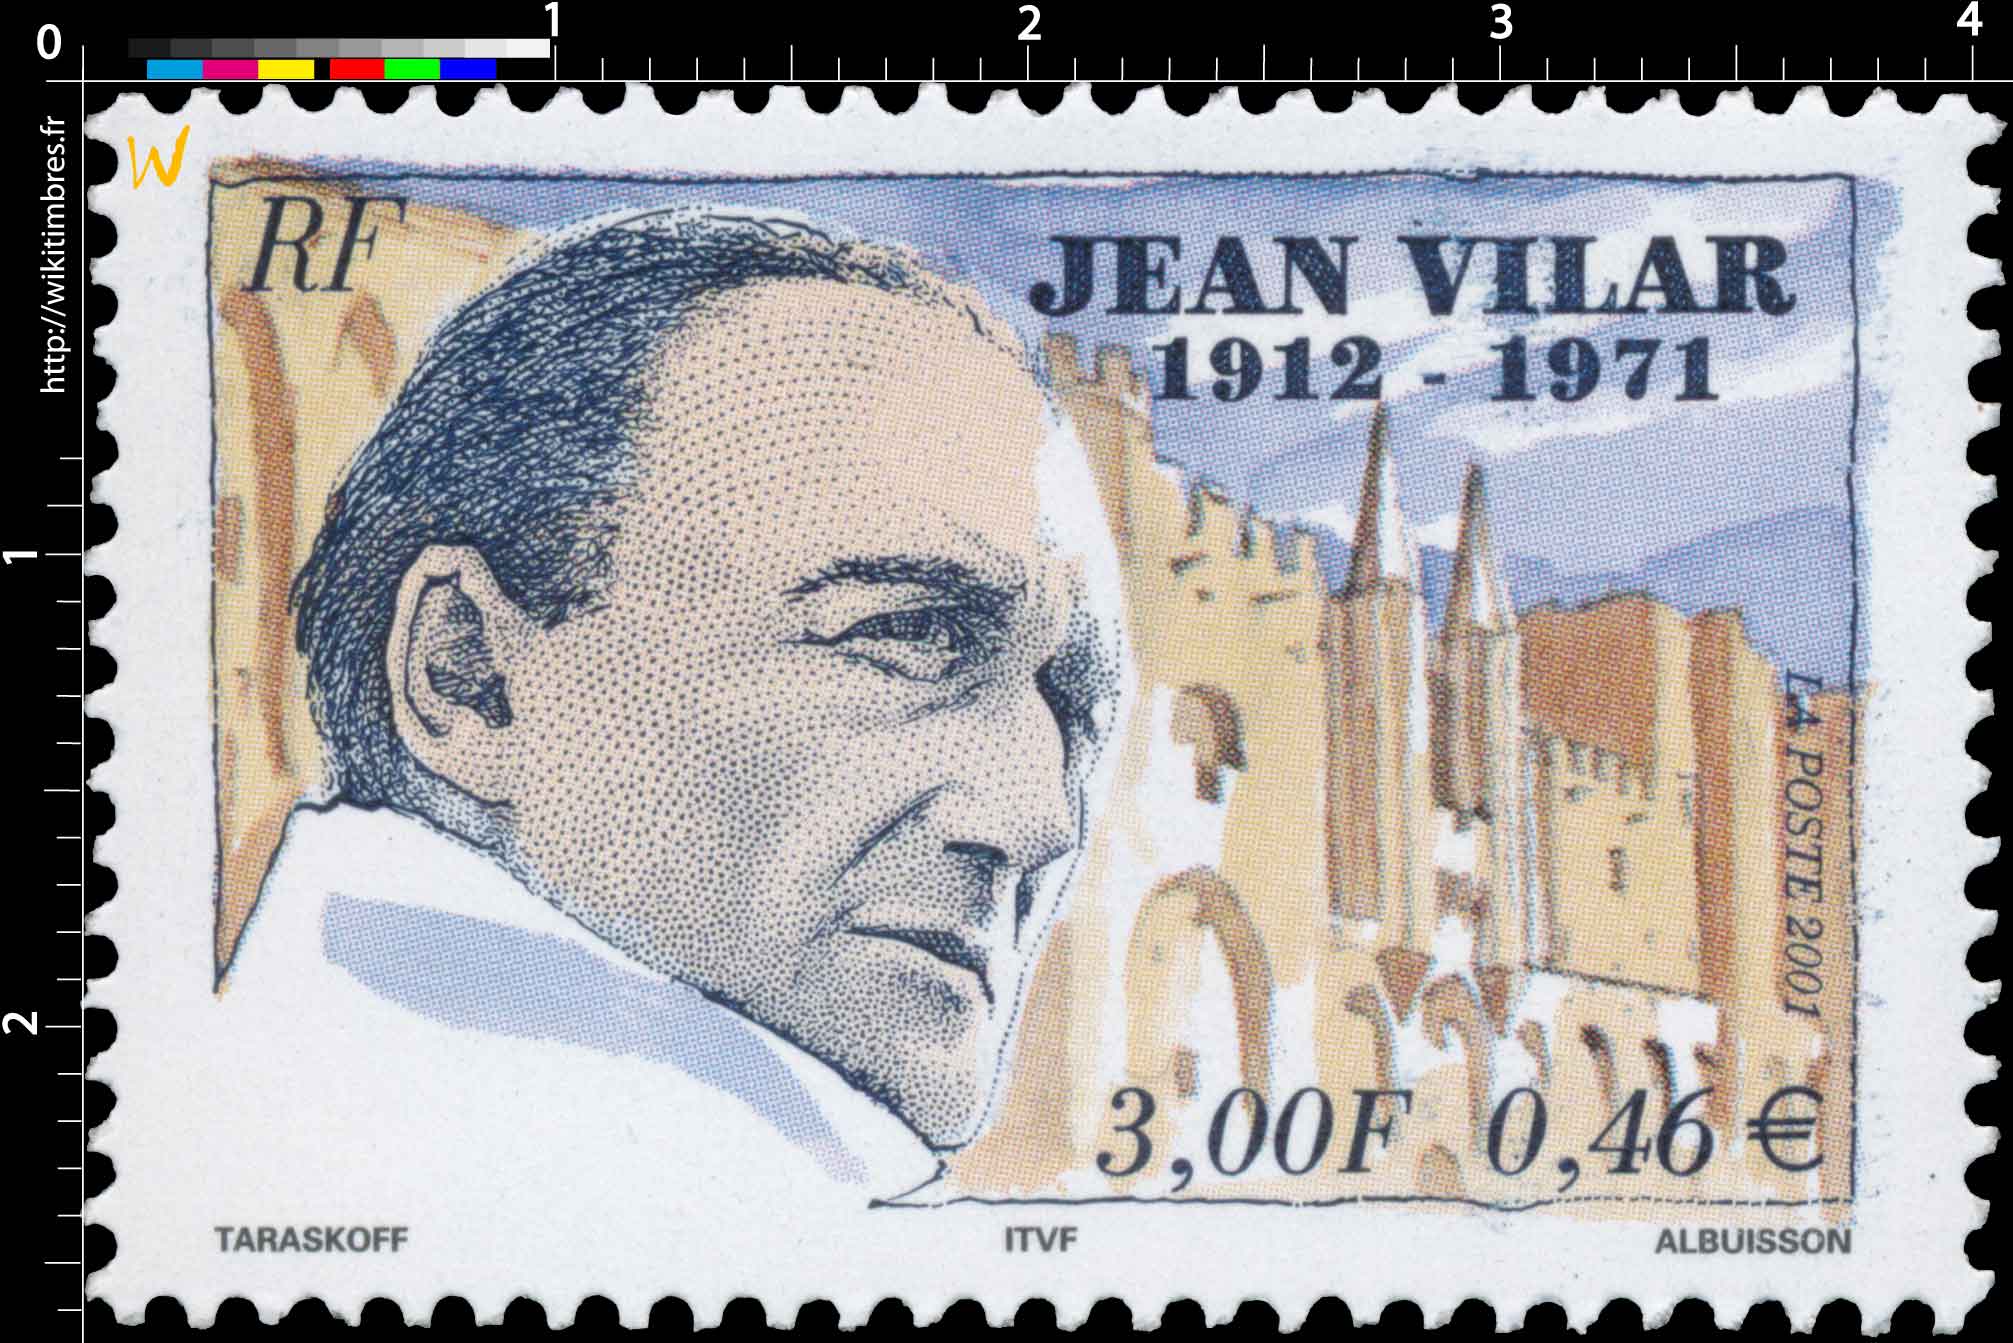 2001 JEAN VILAR 1912-1971